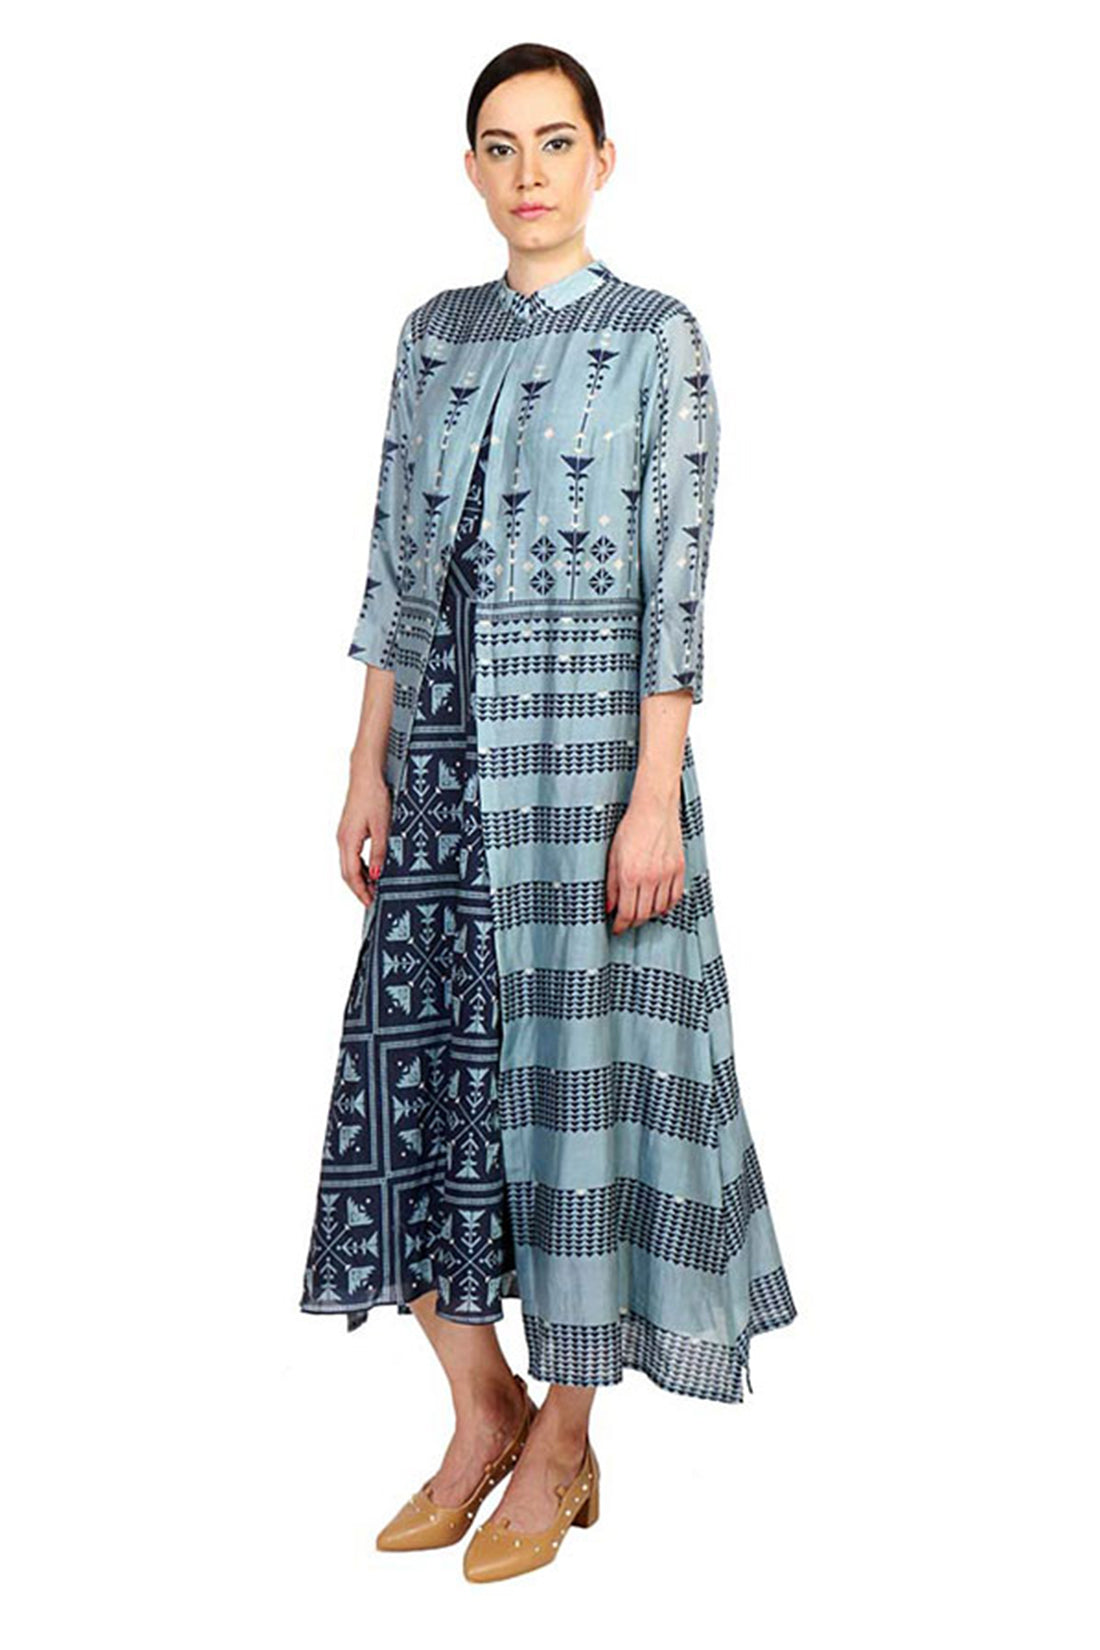 Azulejos Printed Dress With Jacket